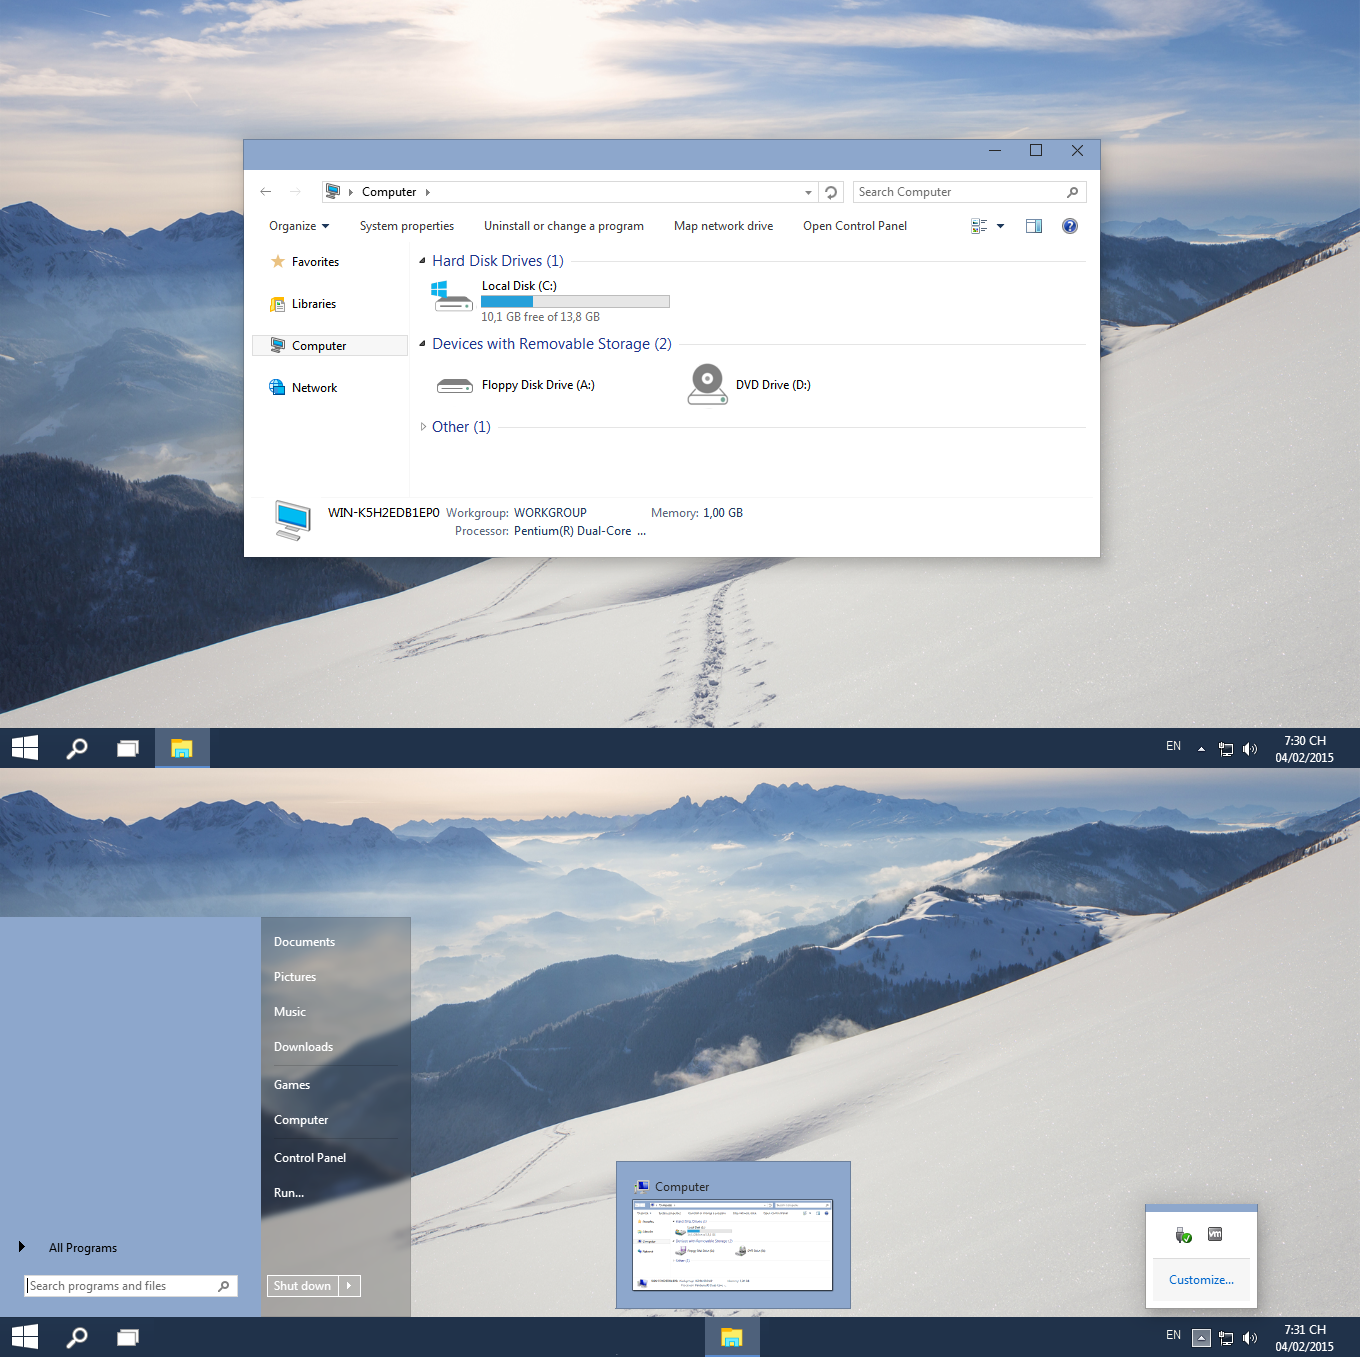 Windows10 TP 9926 Default Theme For Windows 7 | Windows10 Themes I ...